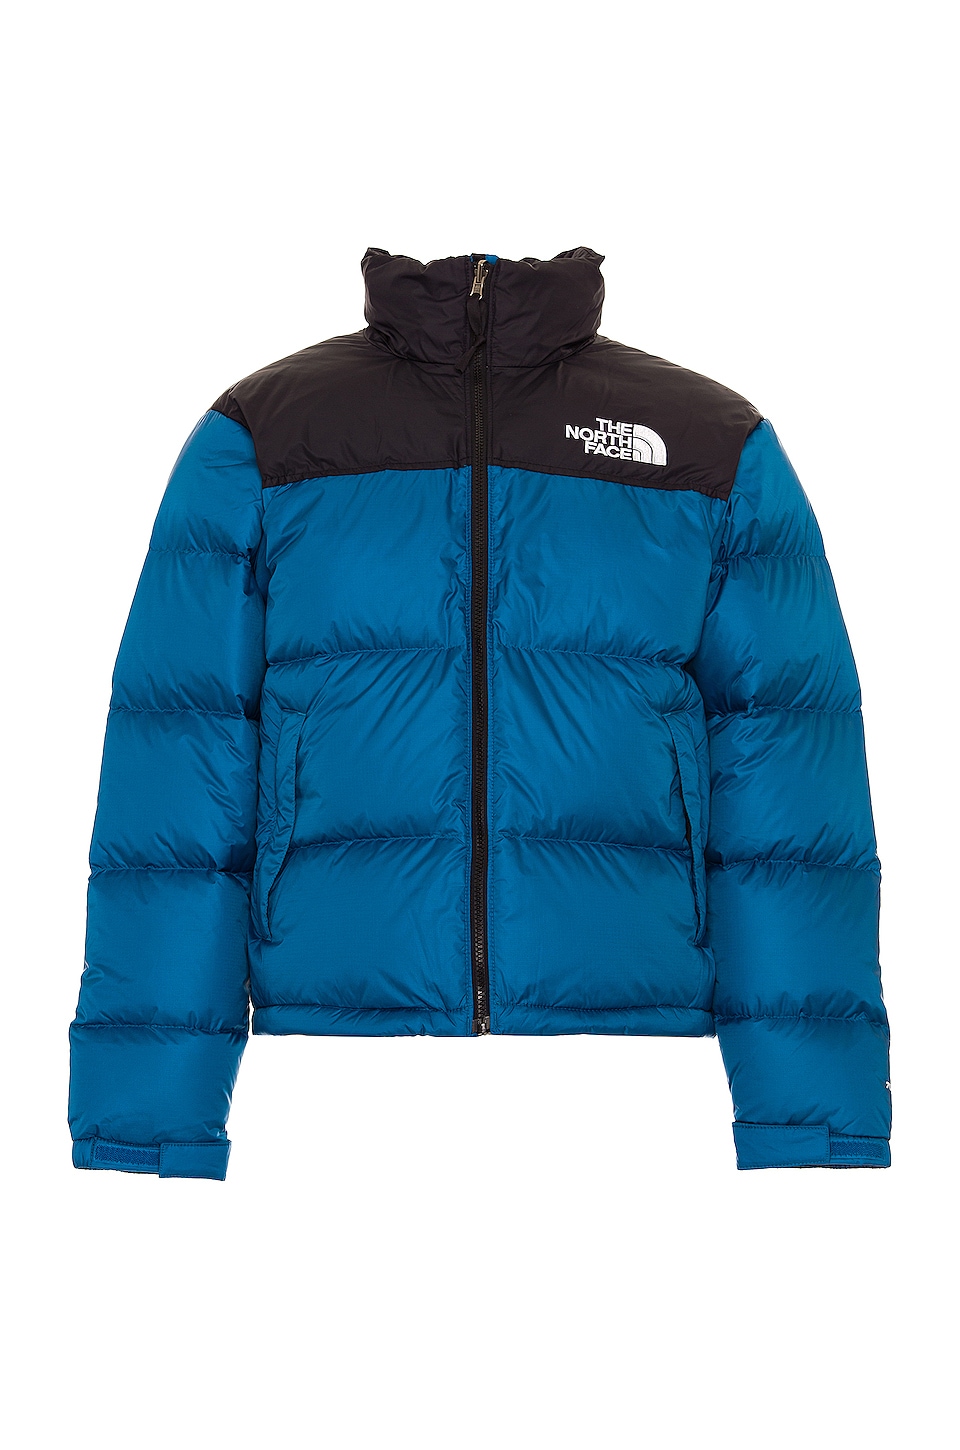 The North Face 1996 Retro Nuptse Jacket in Banff Blue | REVOLVE